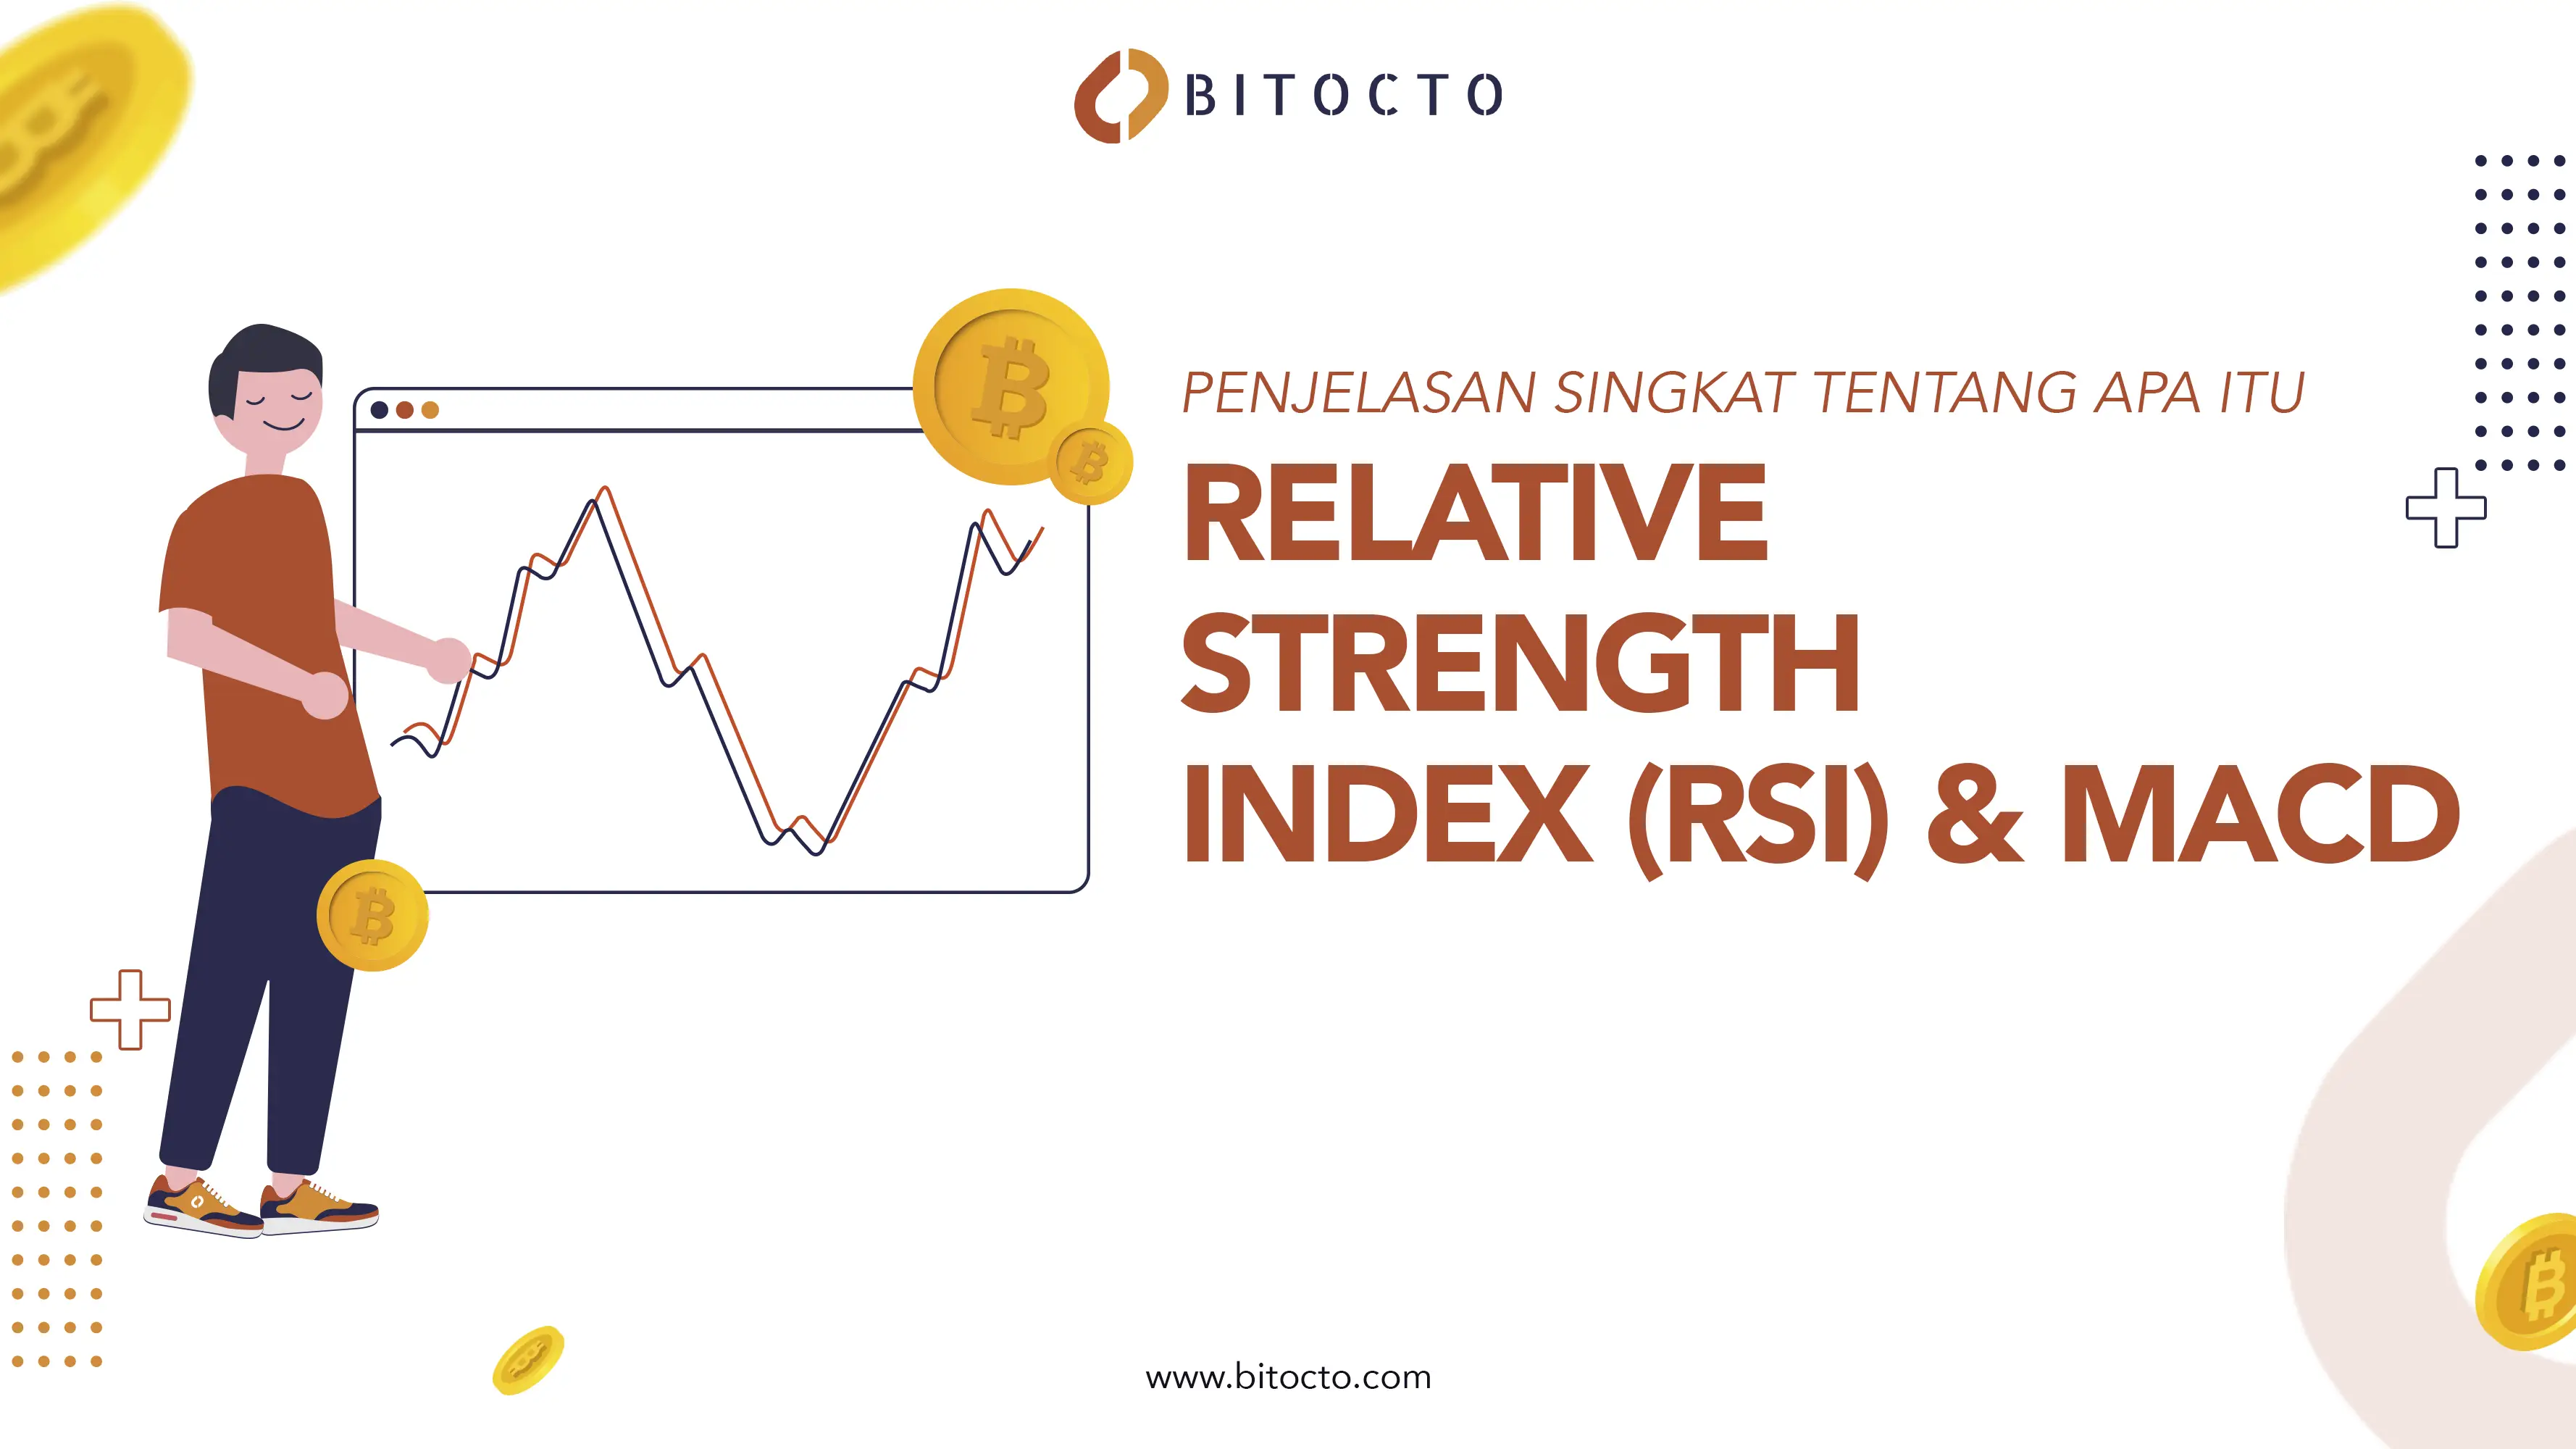 Relative Strength Index (RSI) & MACD